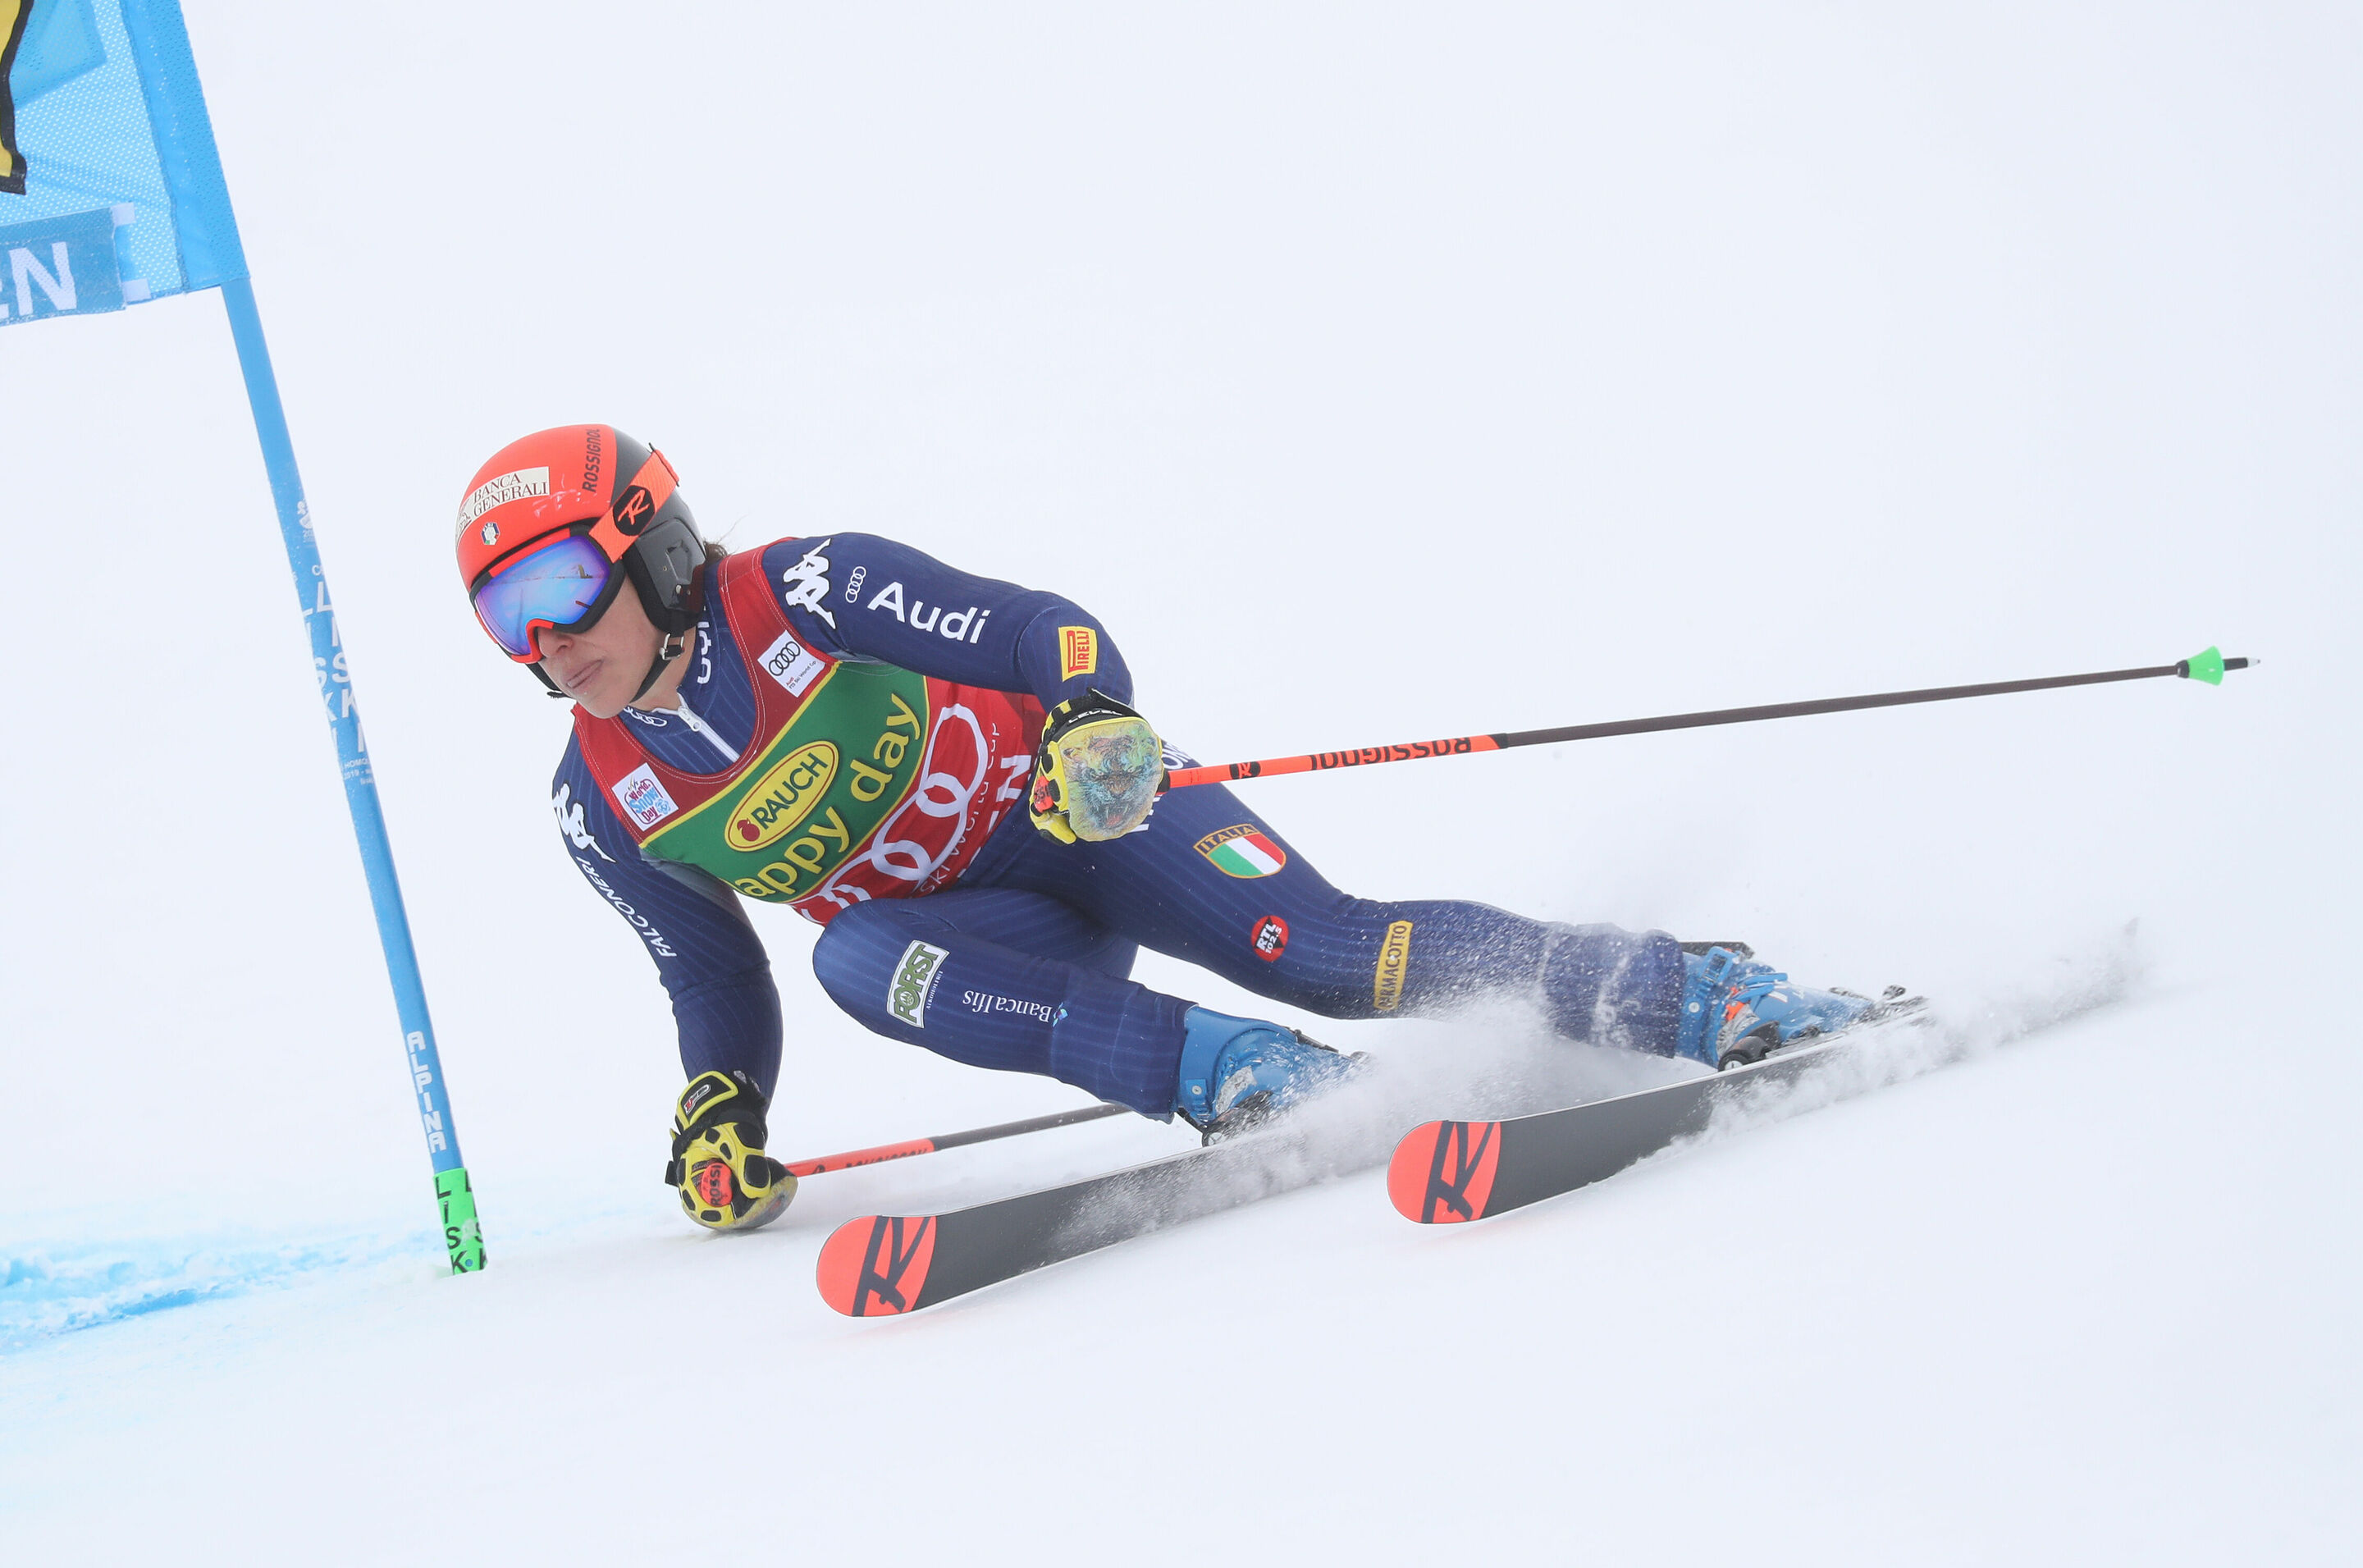 Audi FIS Ski World Cup starts its new season